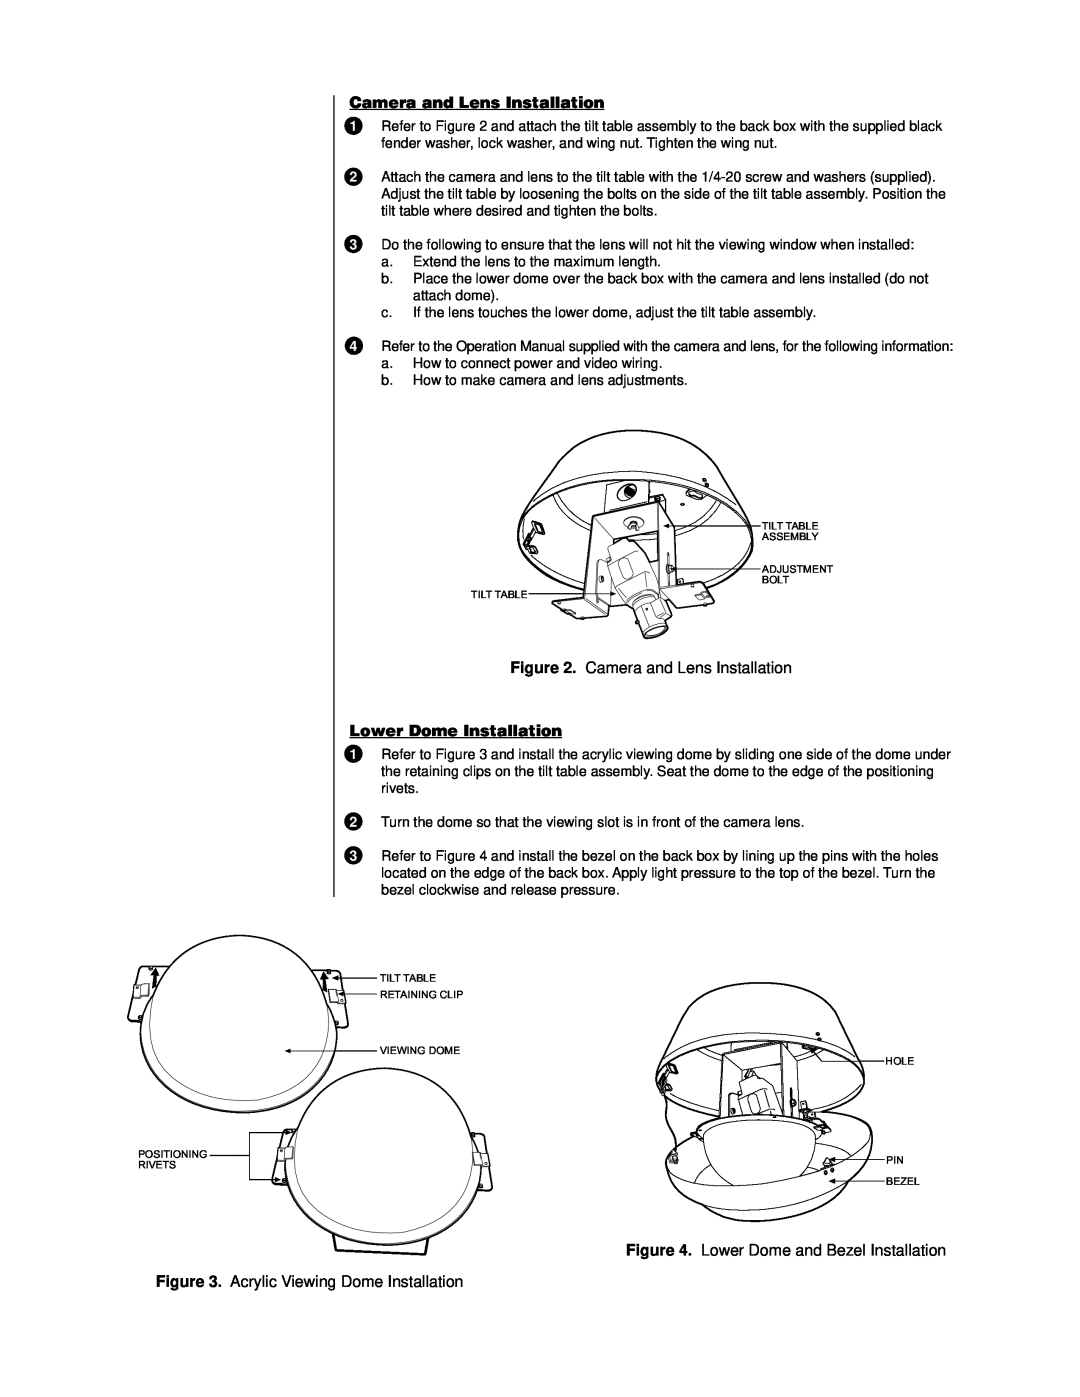 Pelco PDF8 Series manual Camera and Lens Installation, Lower Dome Installation, Lower Dome and Bezel Installation 